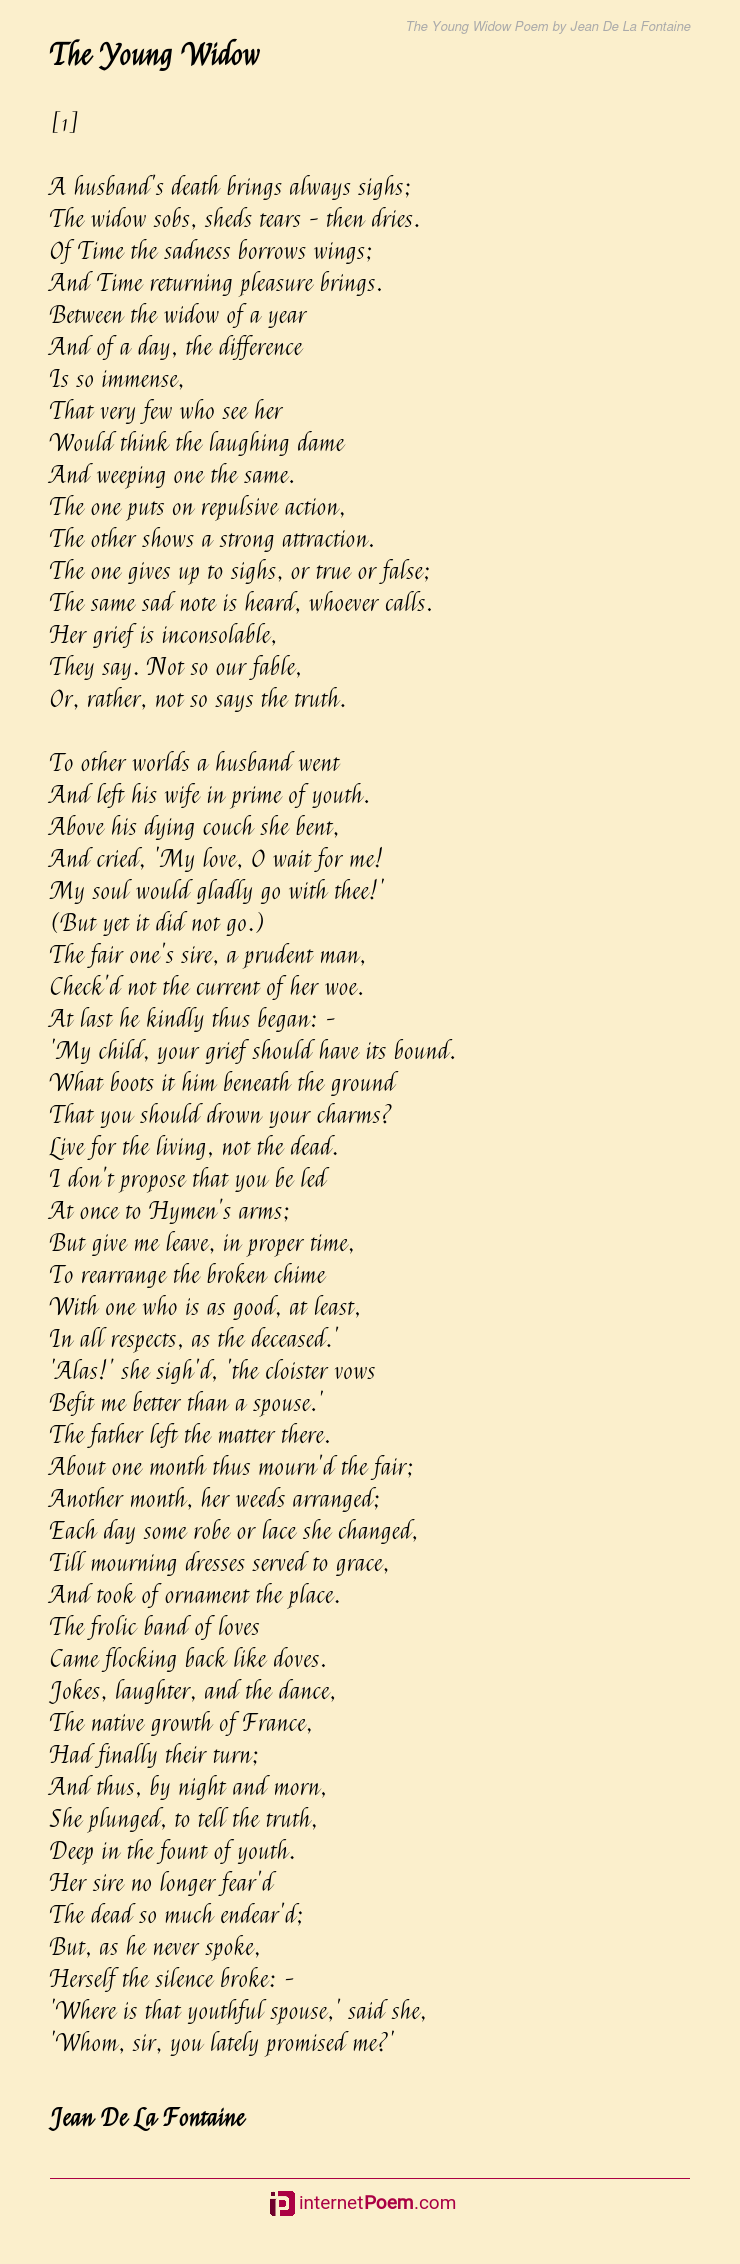 The Young Widow Poem by Jean De La Fontaine